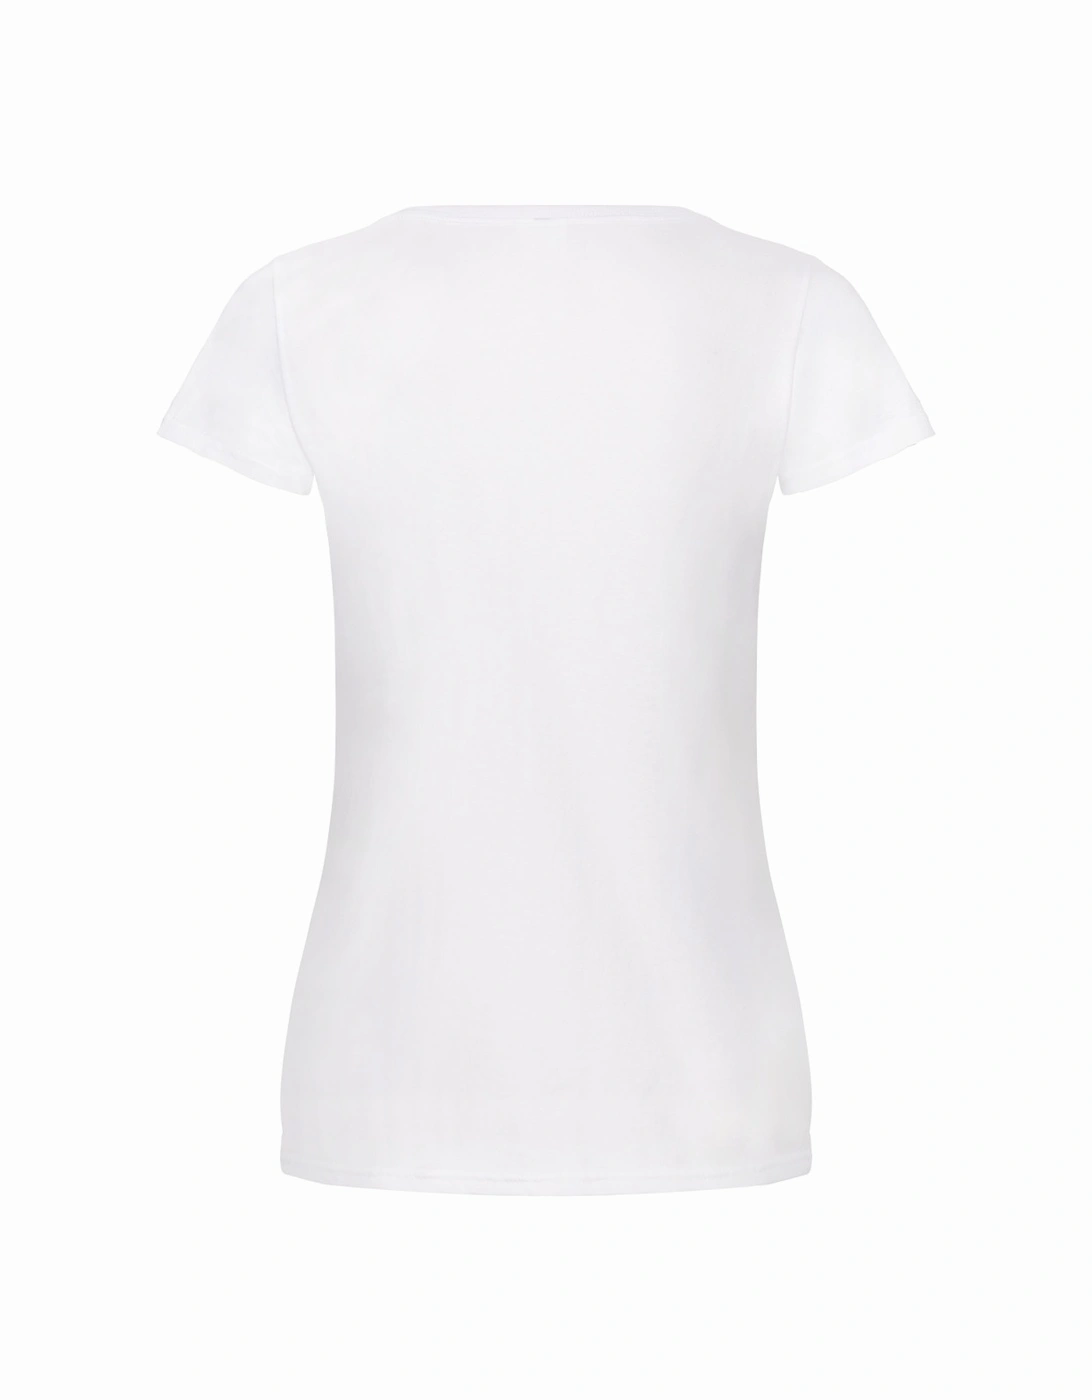 Womens/Ladies Original Plain Lady Fit T-Shirt